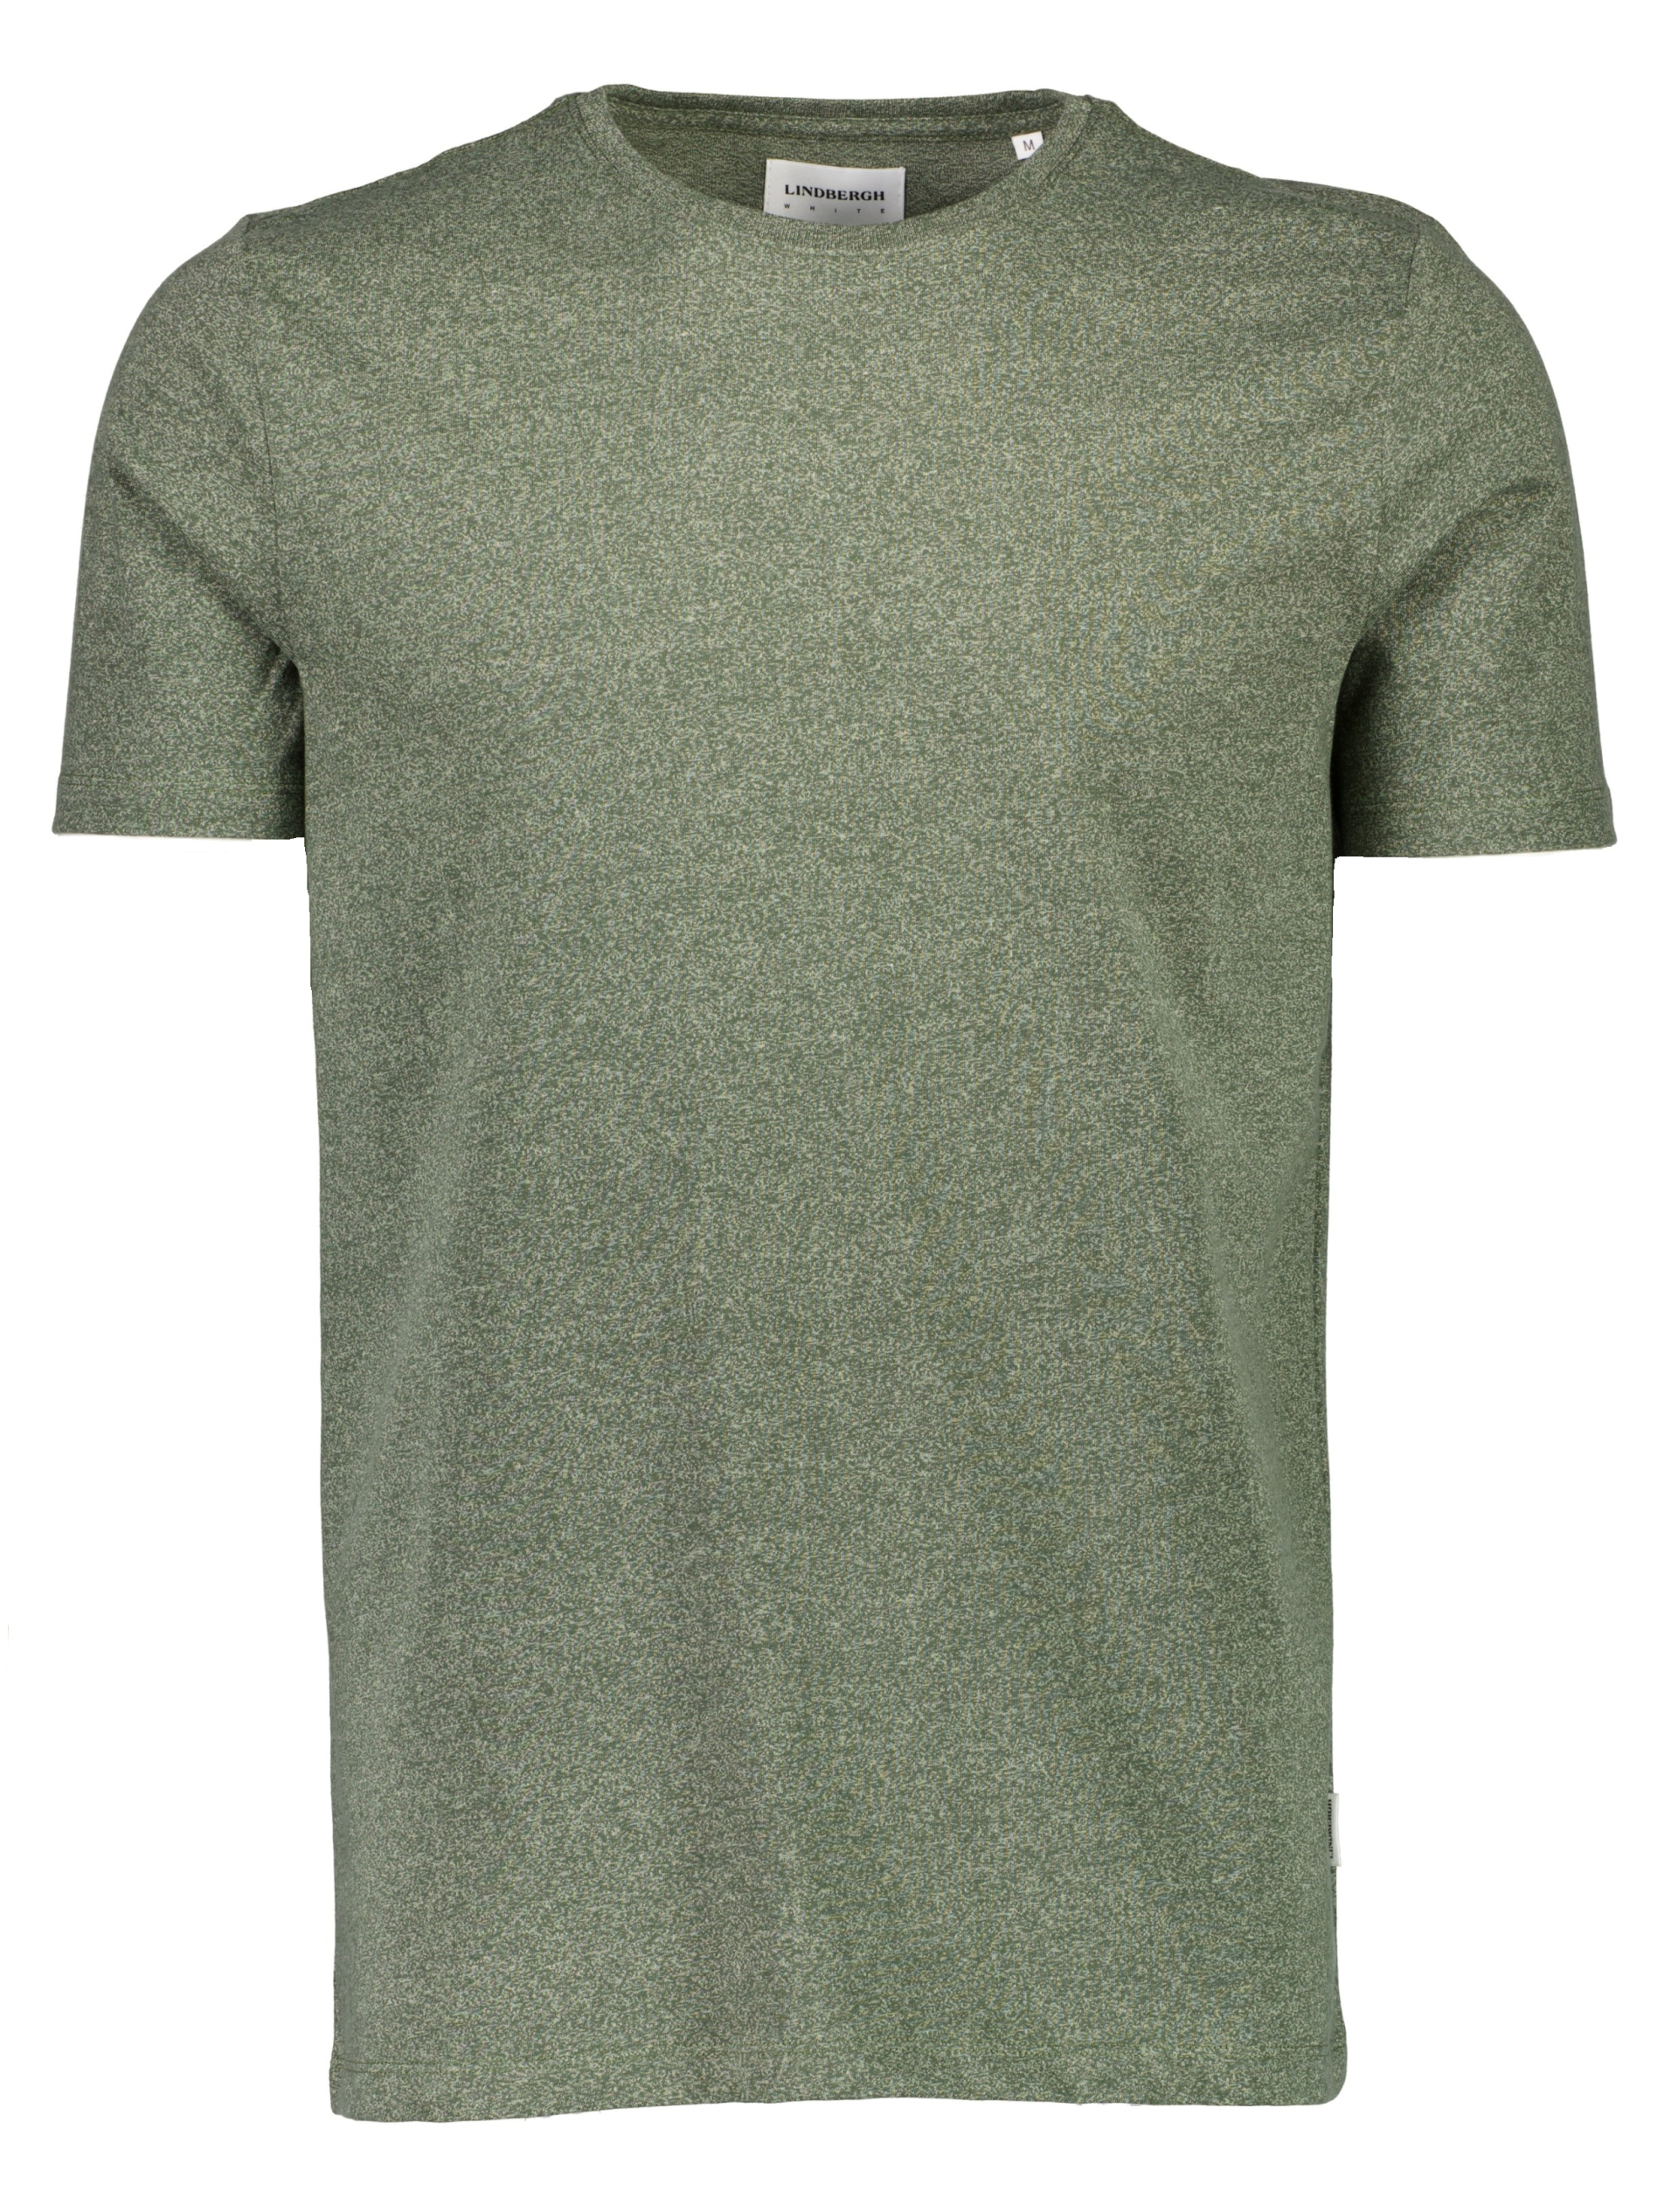 Lindbergh T-shirt grün / dusty army mix